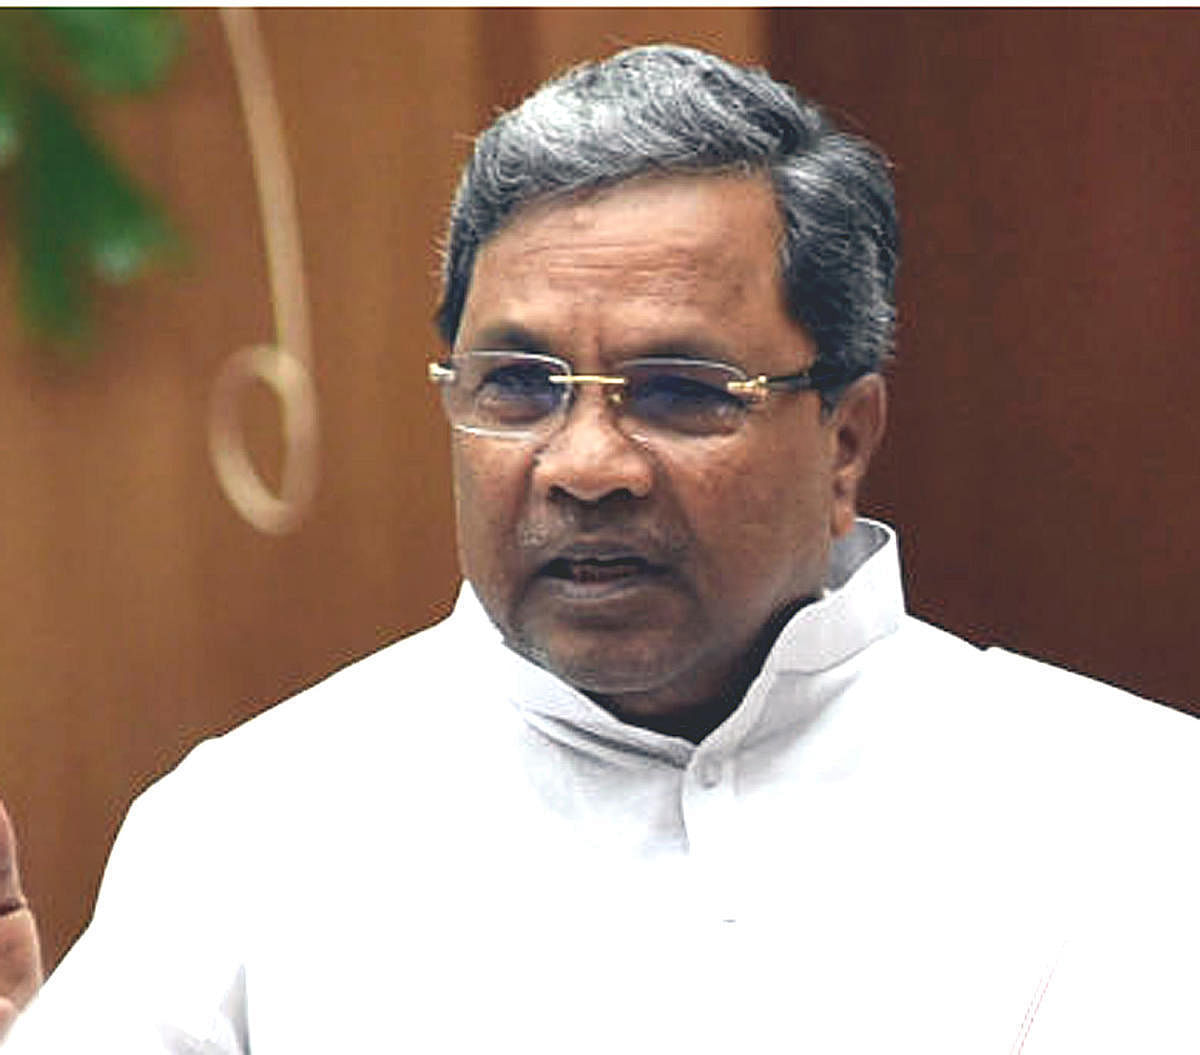 Former Karnataka Chief Minister Siddaramaiah. File photo